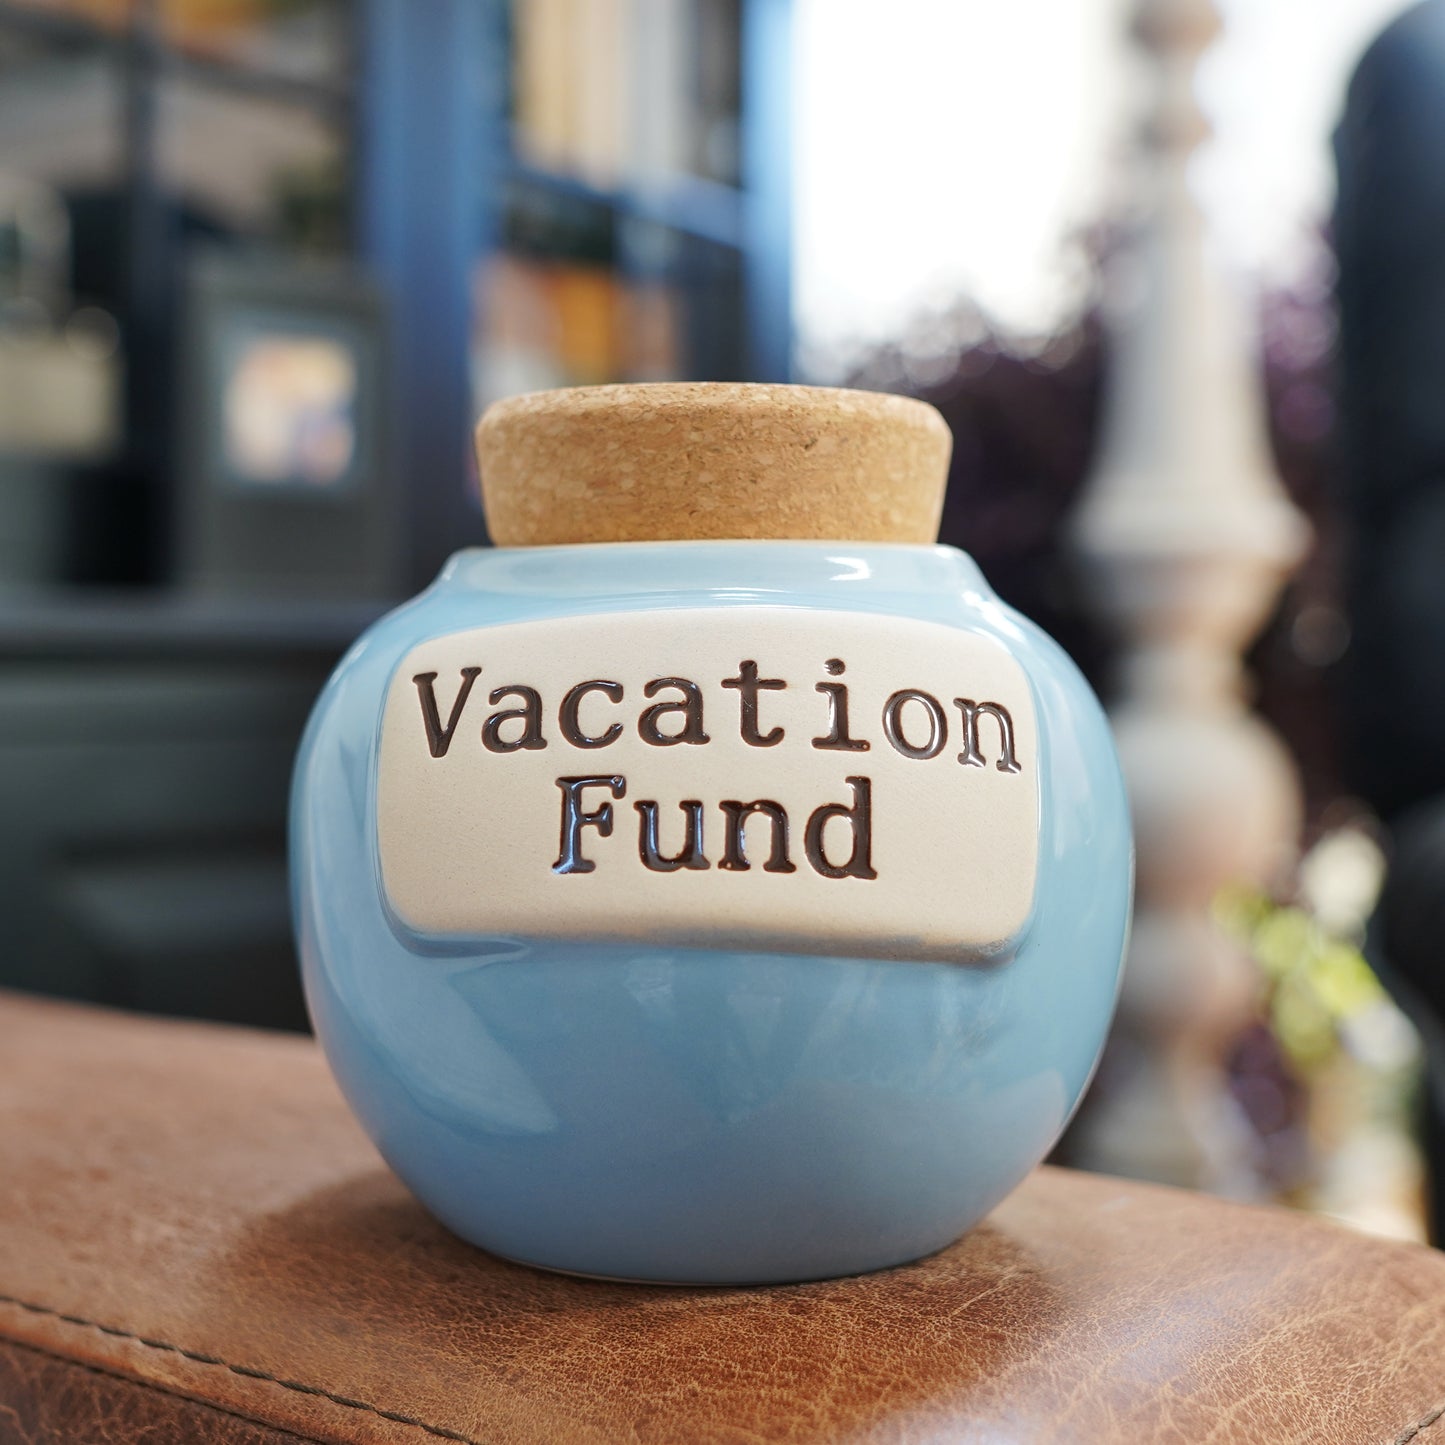 Cottage Creek Vacation Fund Piggy Bank, Our Adventure Ceramic, 6", Light Blue Travel Savings Bank, Candy Jar